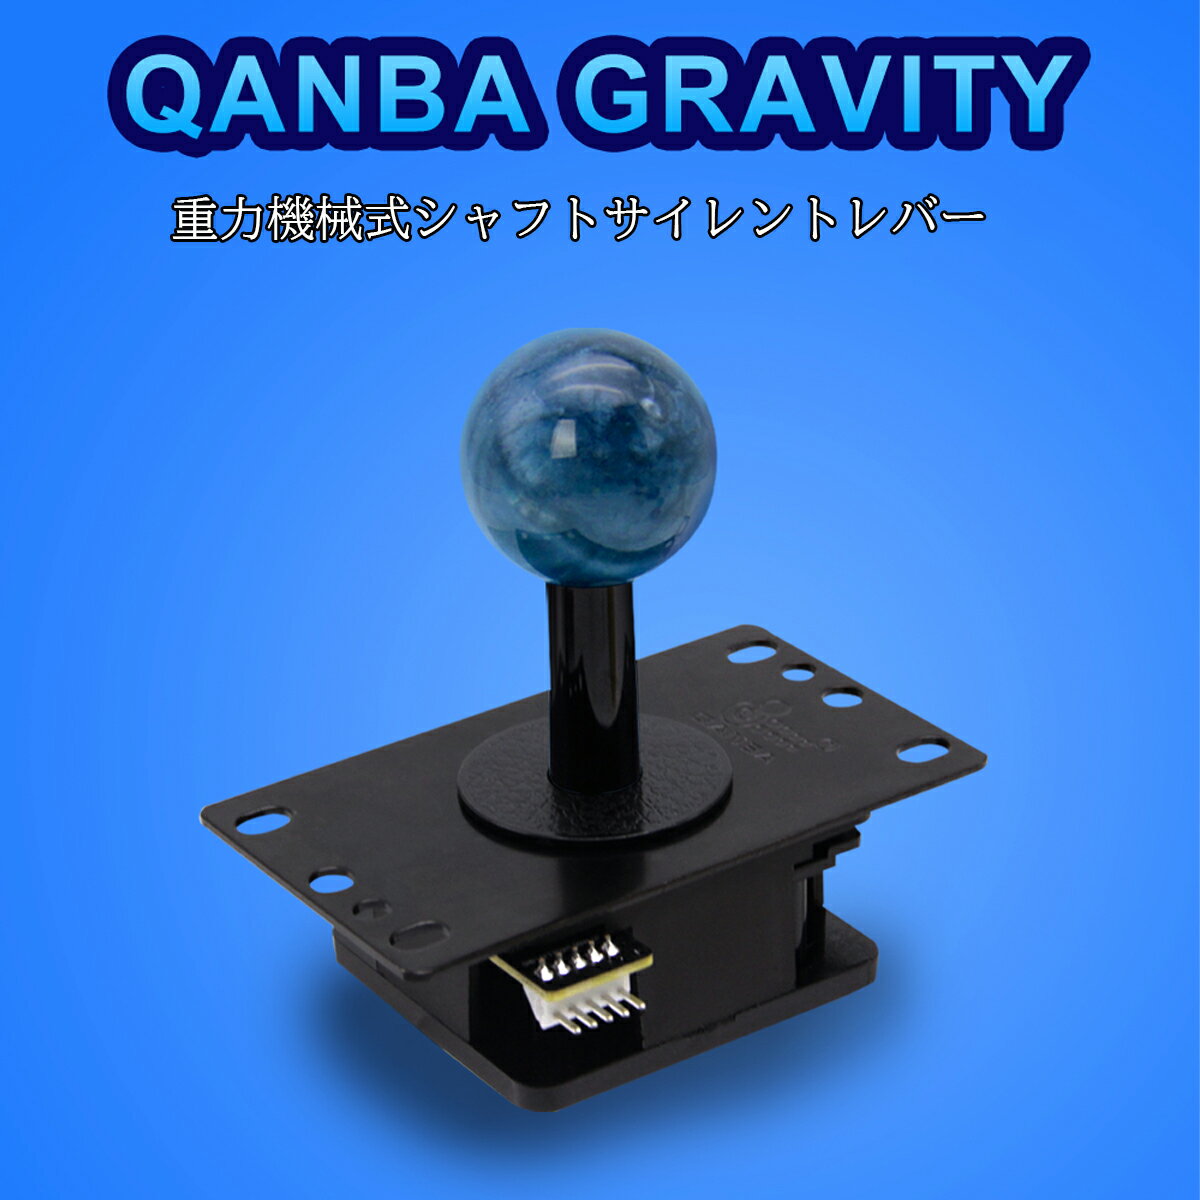 Qanba Gravity クァンバ グラビティ メカニカル シャフト スイッチ 静音レバー レバーボール 四角ガイド 交換用 円形ガイド 標準スプリング 交換用 0.5倍弾力 2倍弾力 スプリング ディスク シャフトカバー 付属